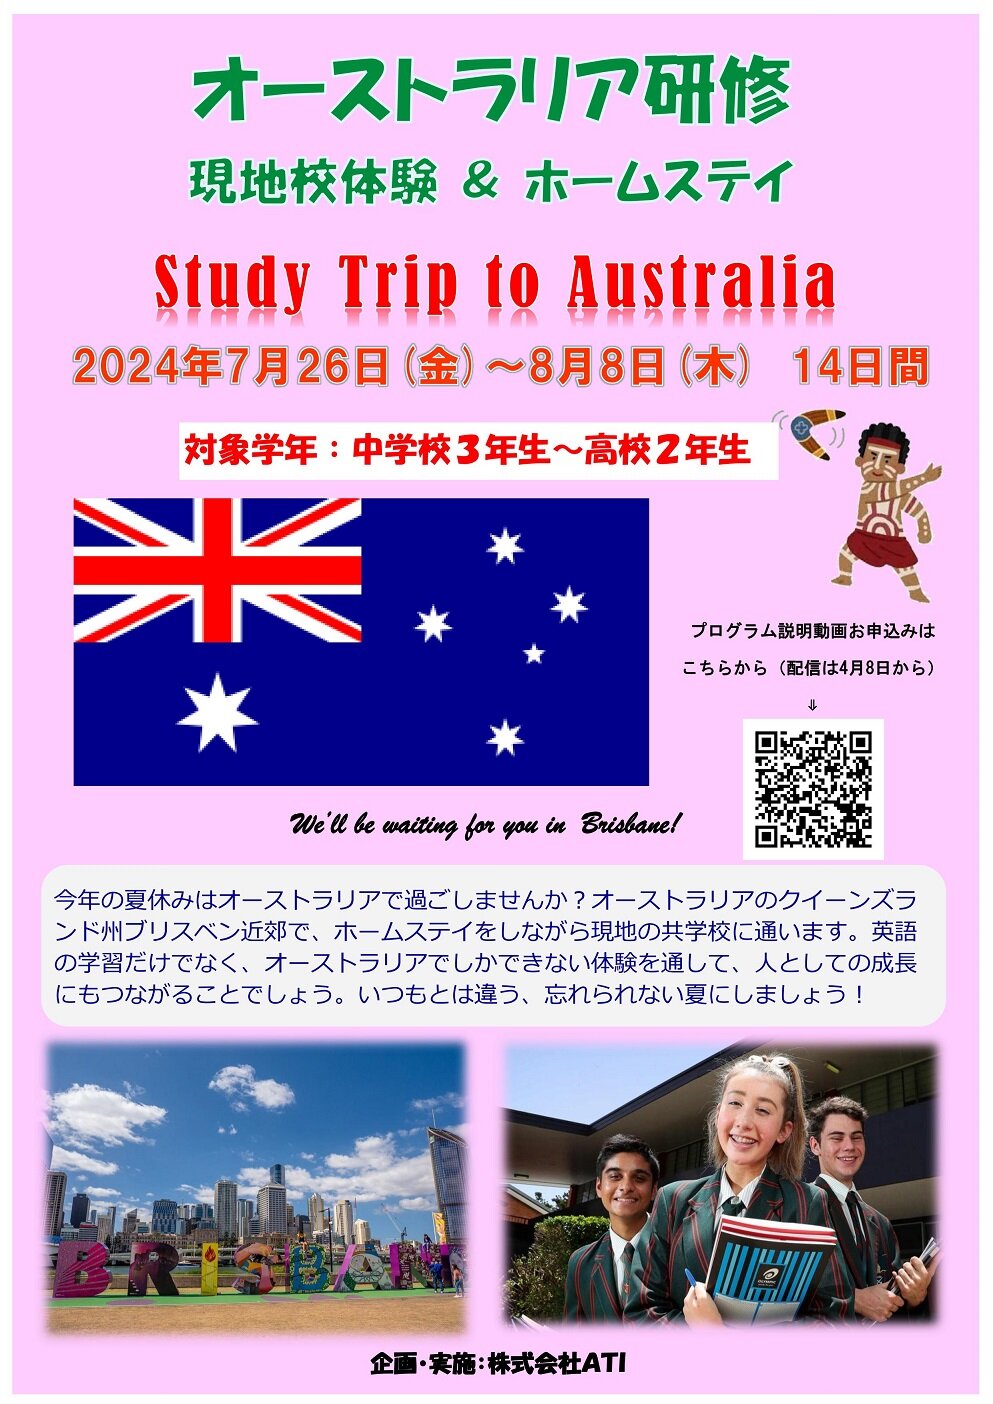 study trip to Australia 2024_application guidelines.jpg